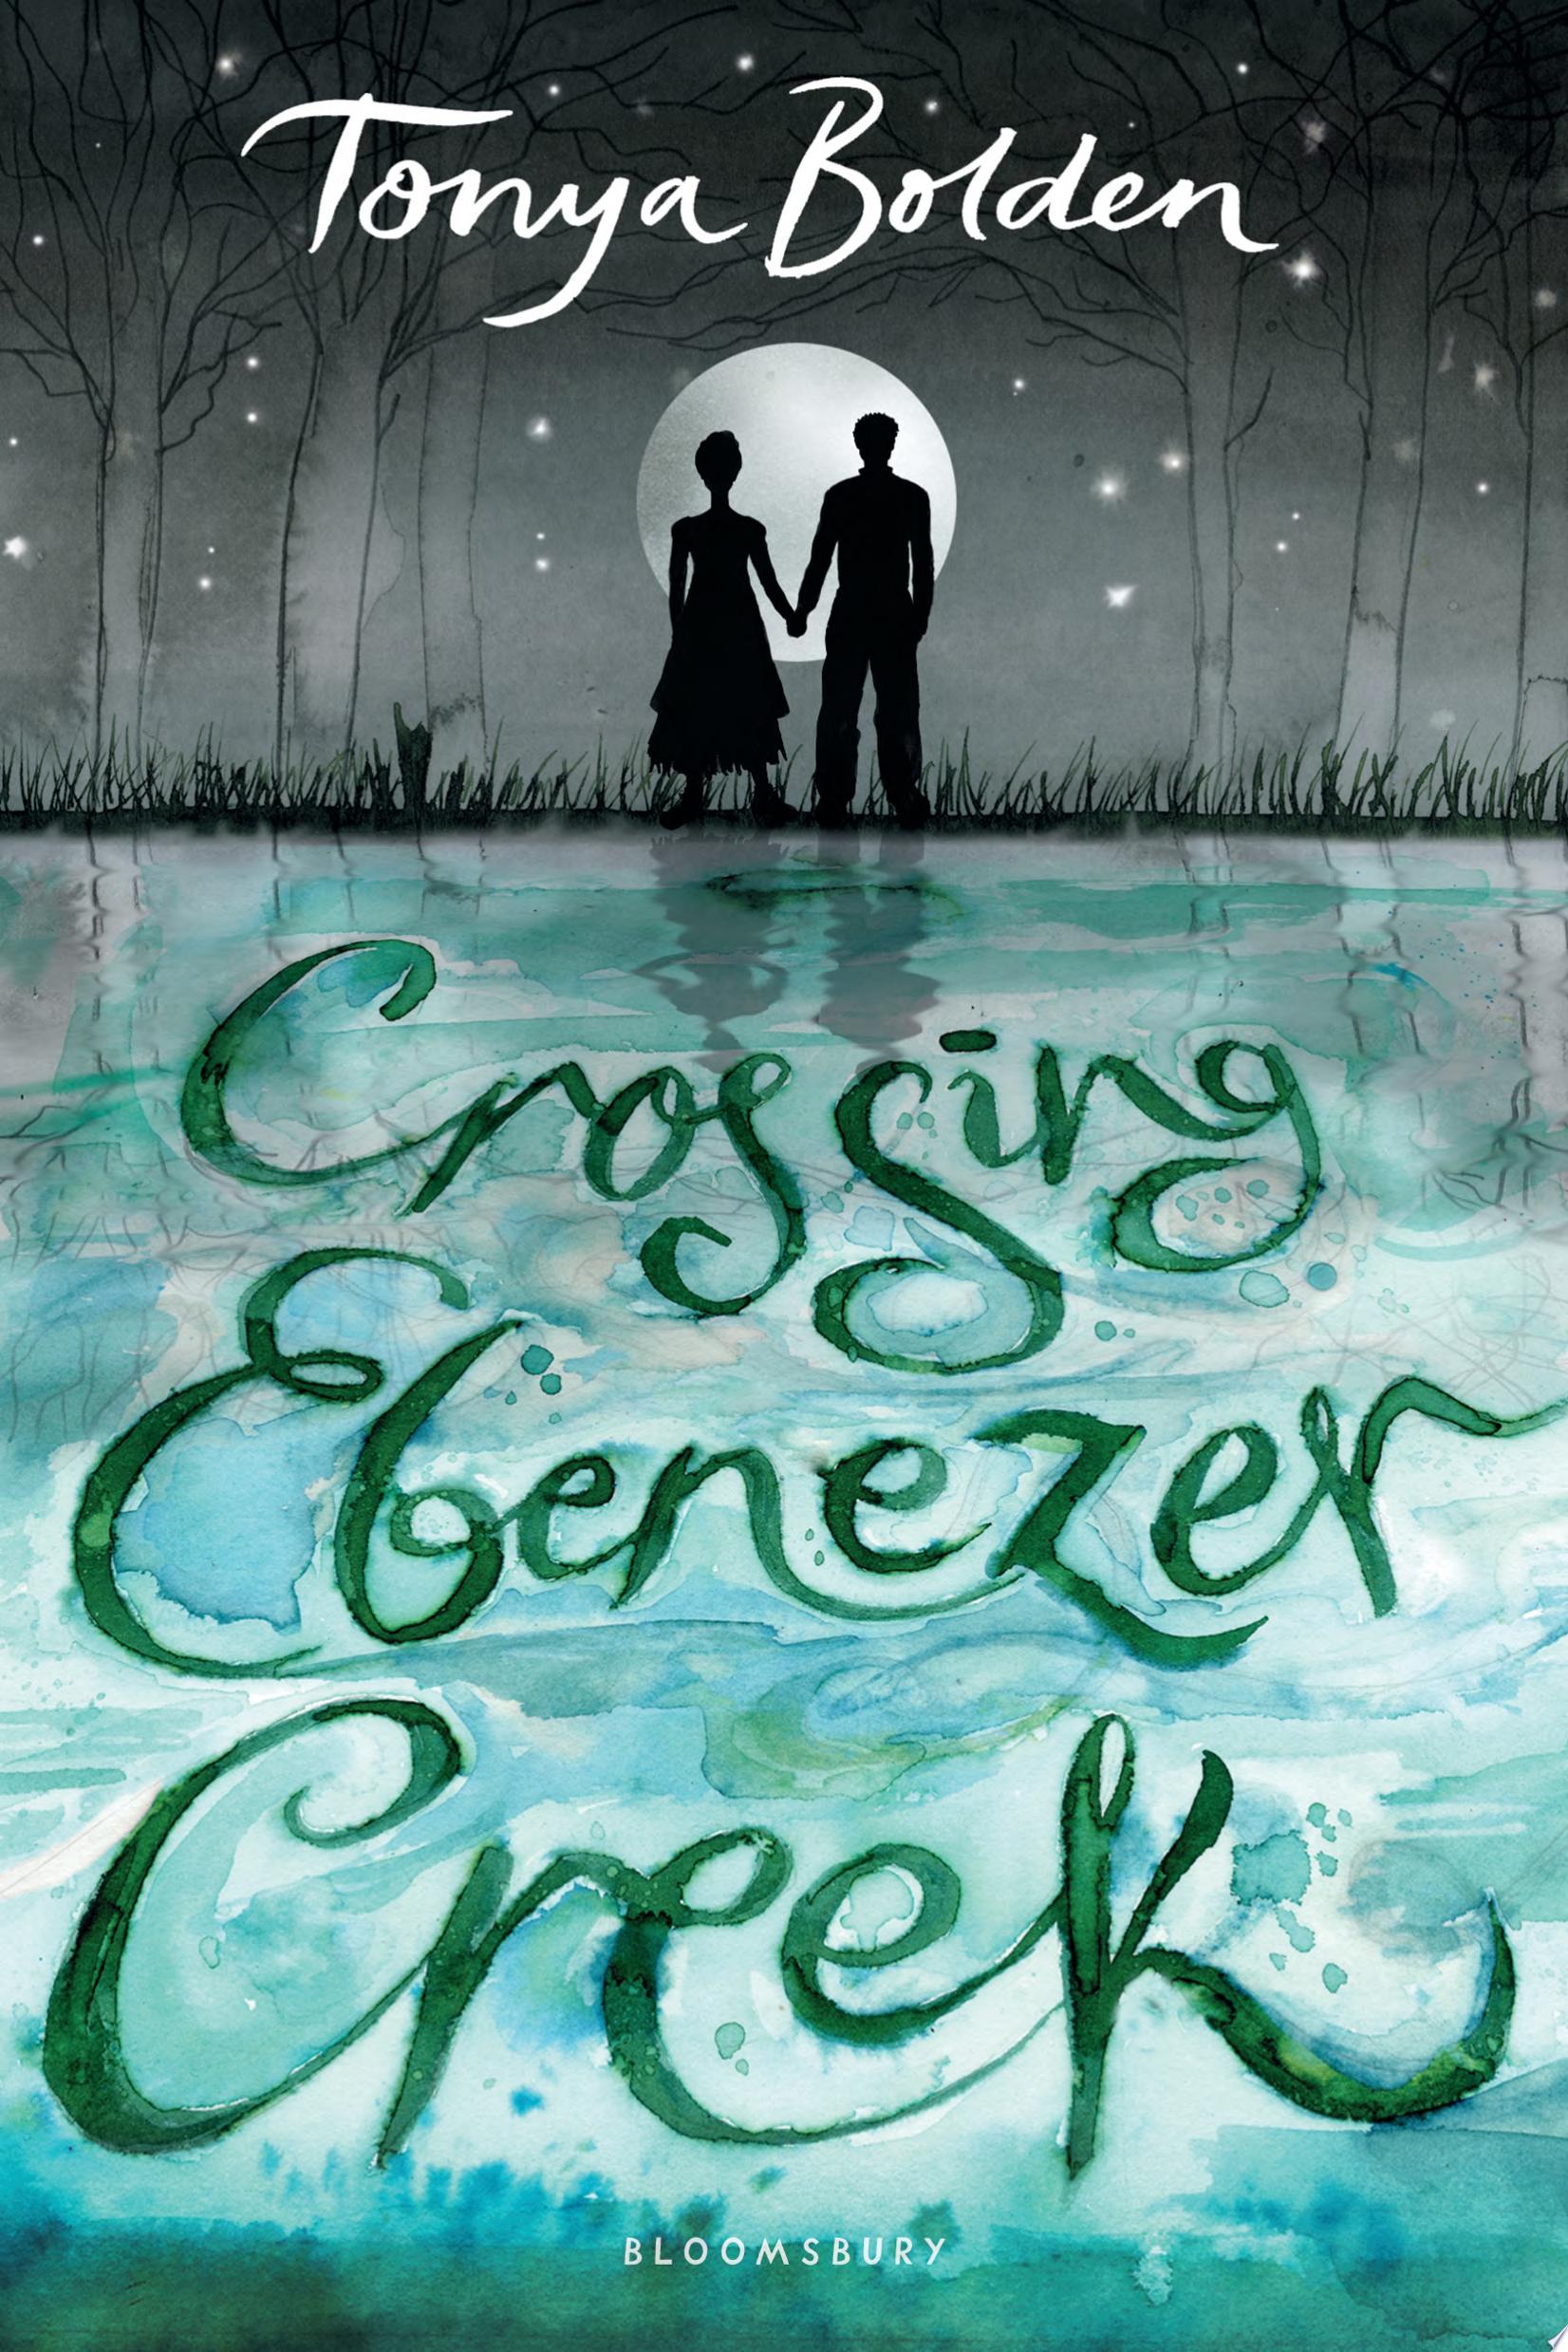 Image for "Crossing Ebenezer Creek"